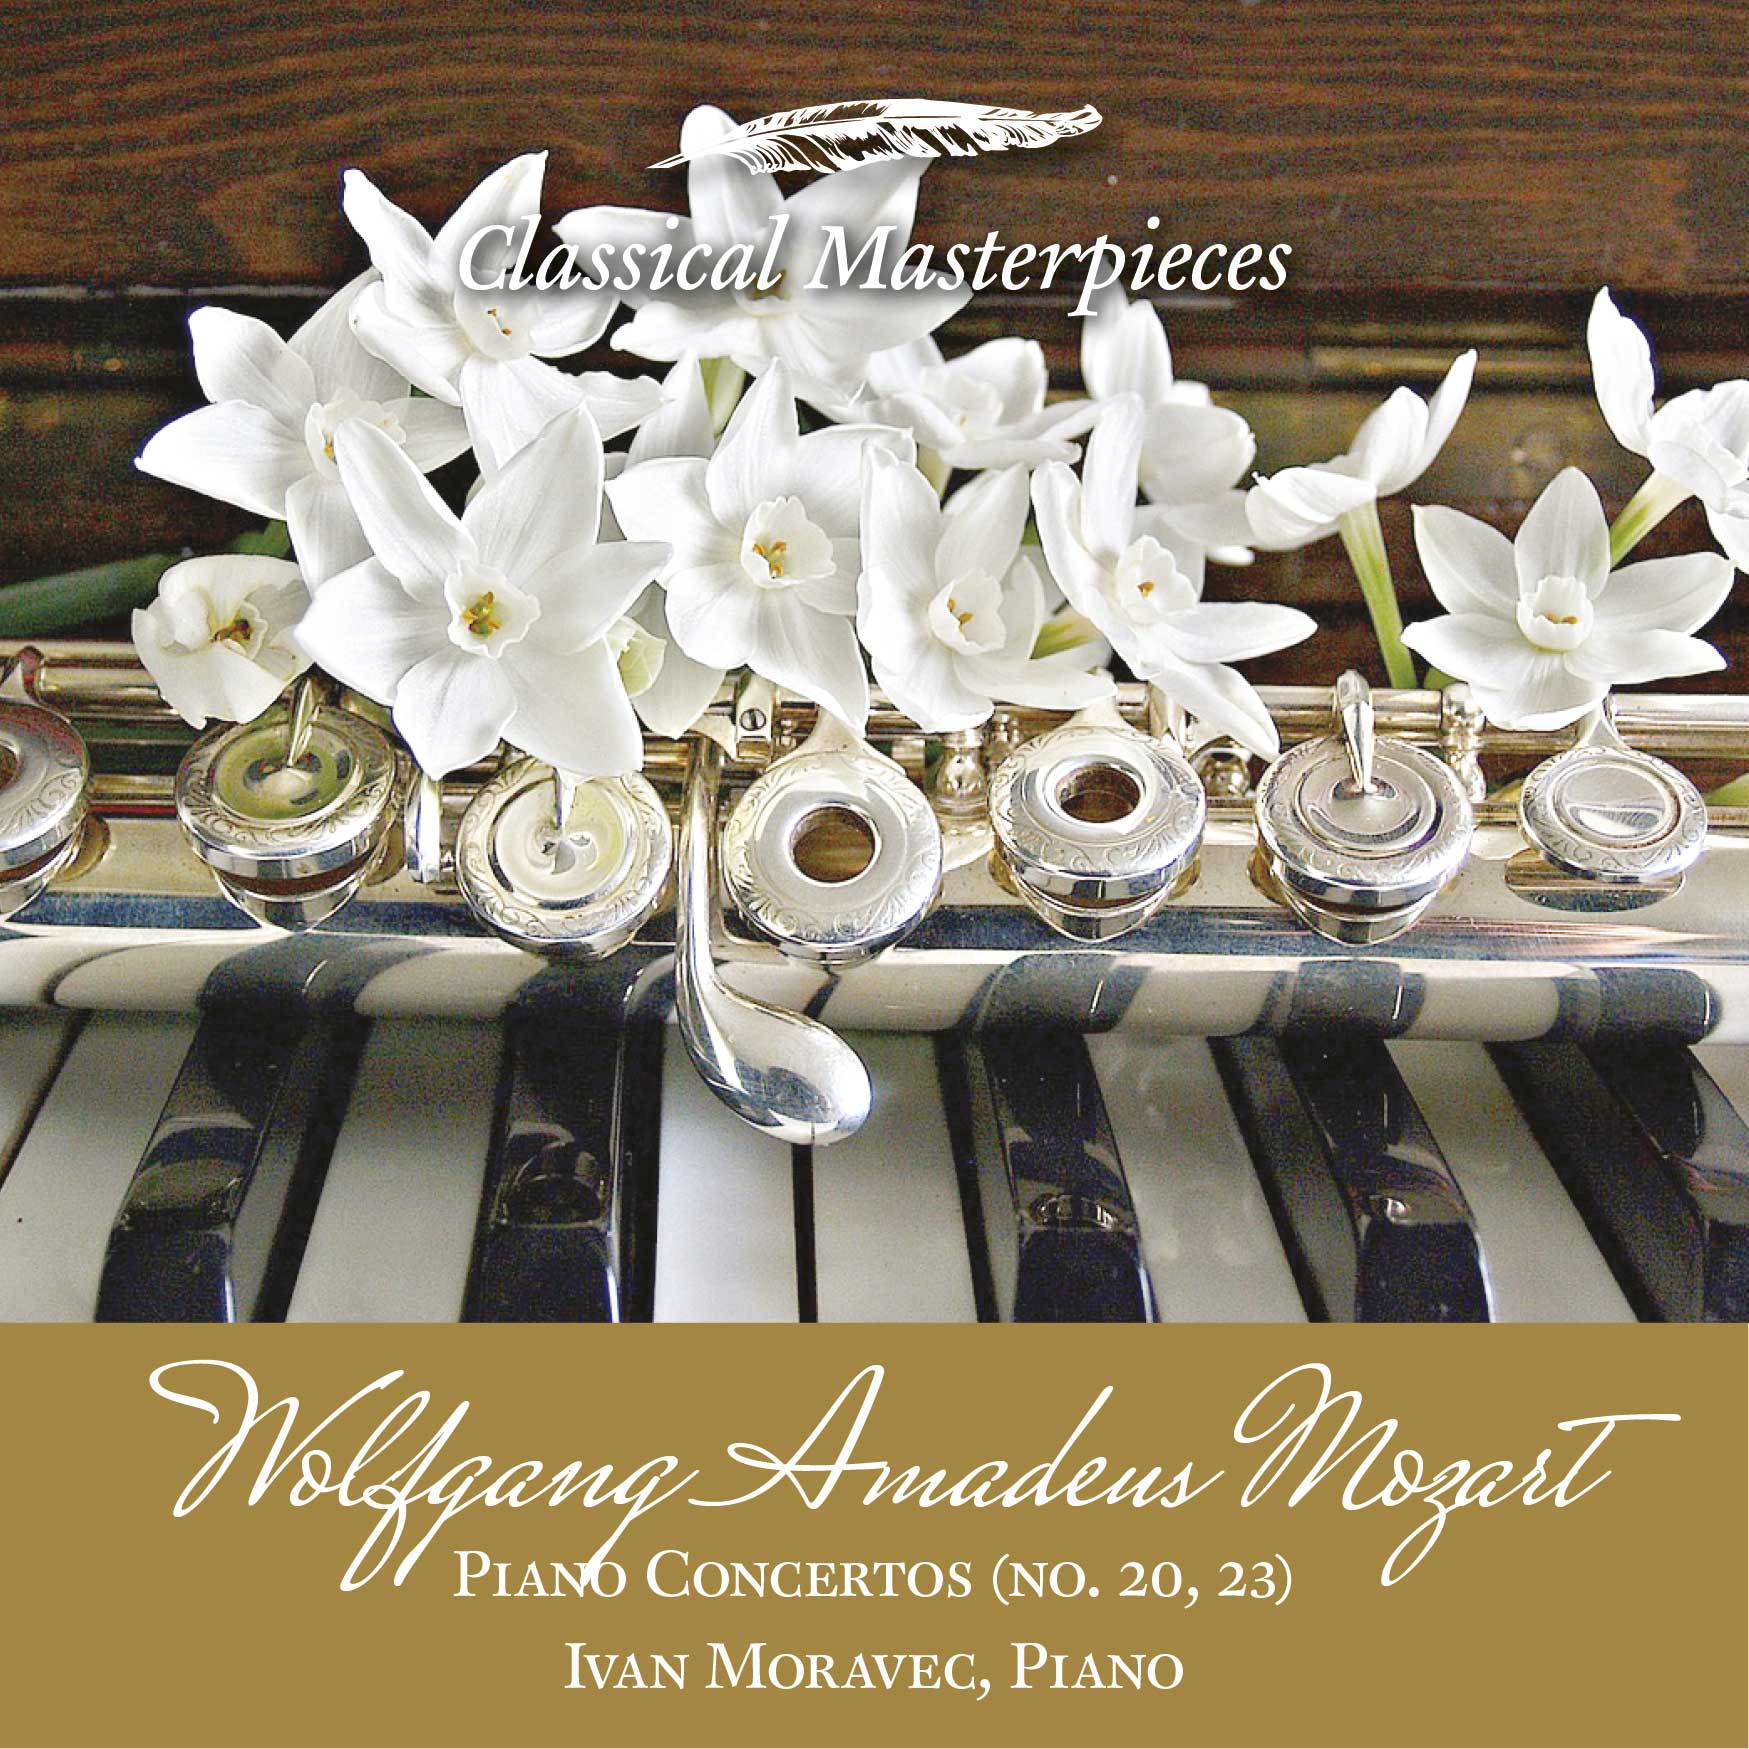 Wolfgang Amadeus Mozart Piano Concertos (no.20,23) Ivan Moravec, Piano